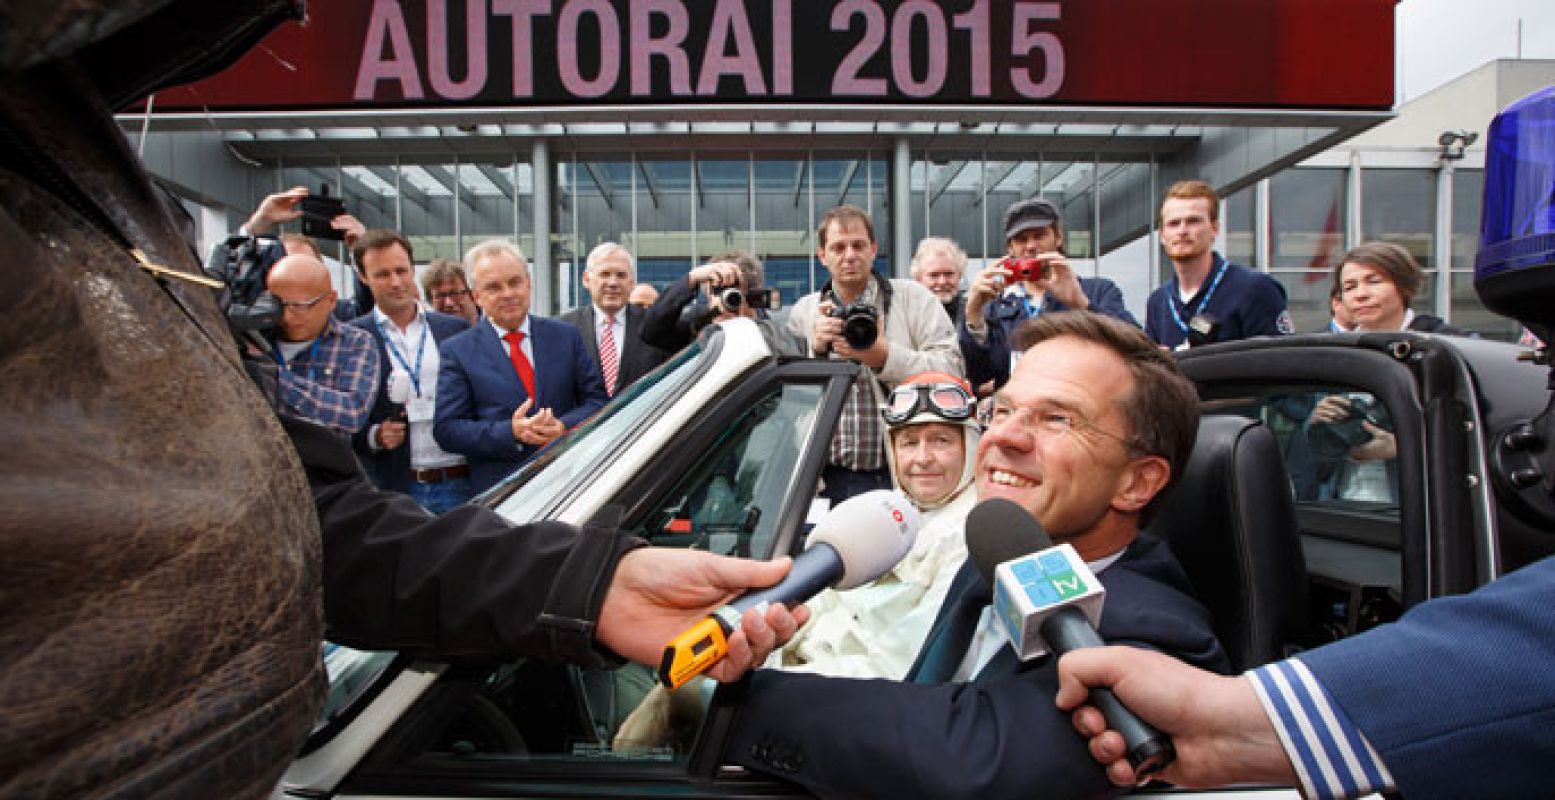 Minister-President Rutte gaf het startsein voor de AutoRAI. Foto: AutoRAI